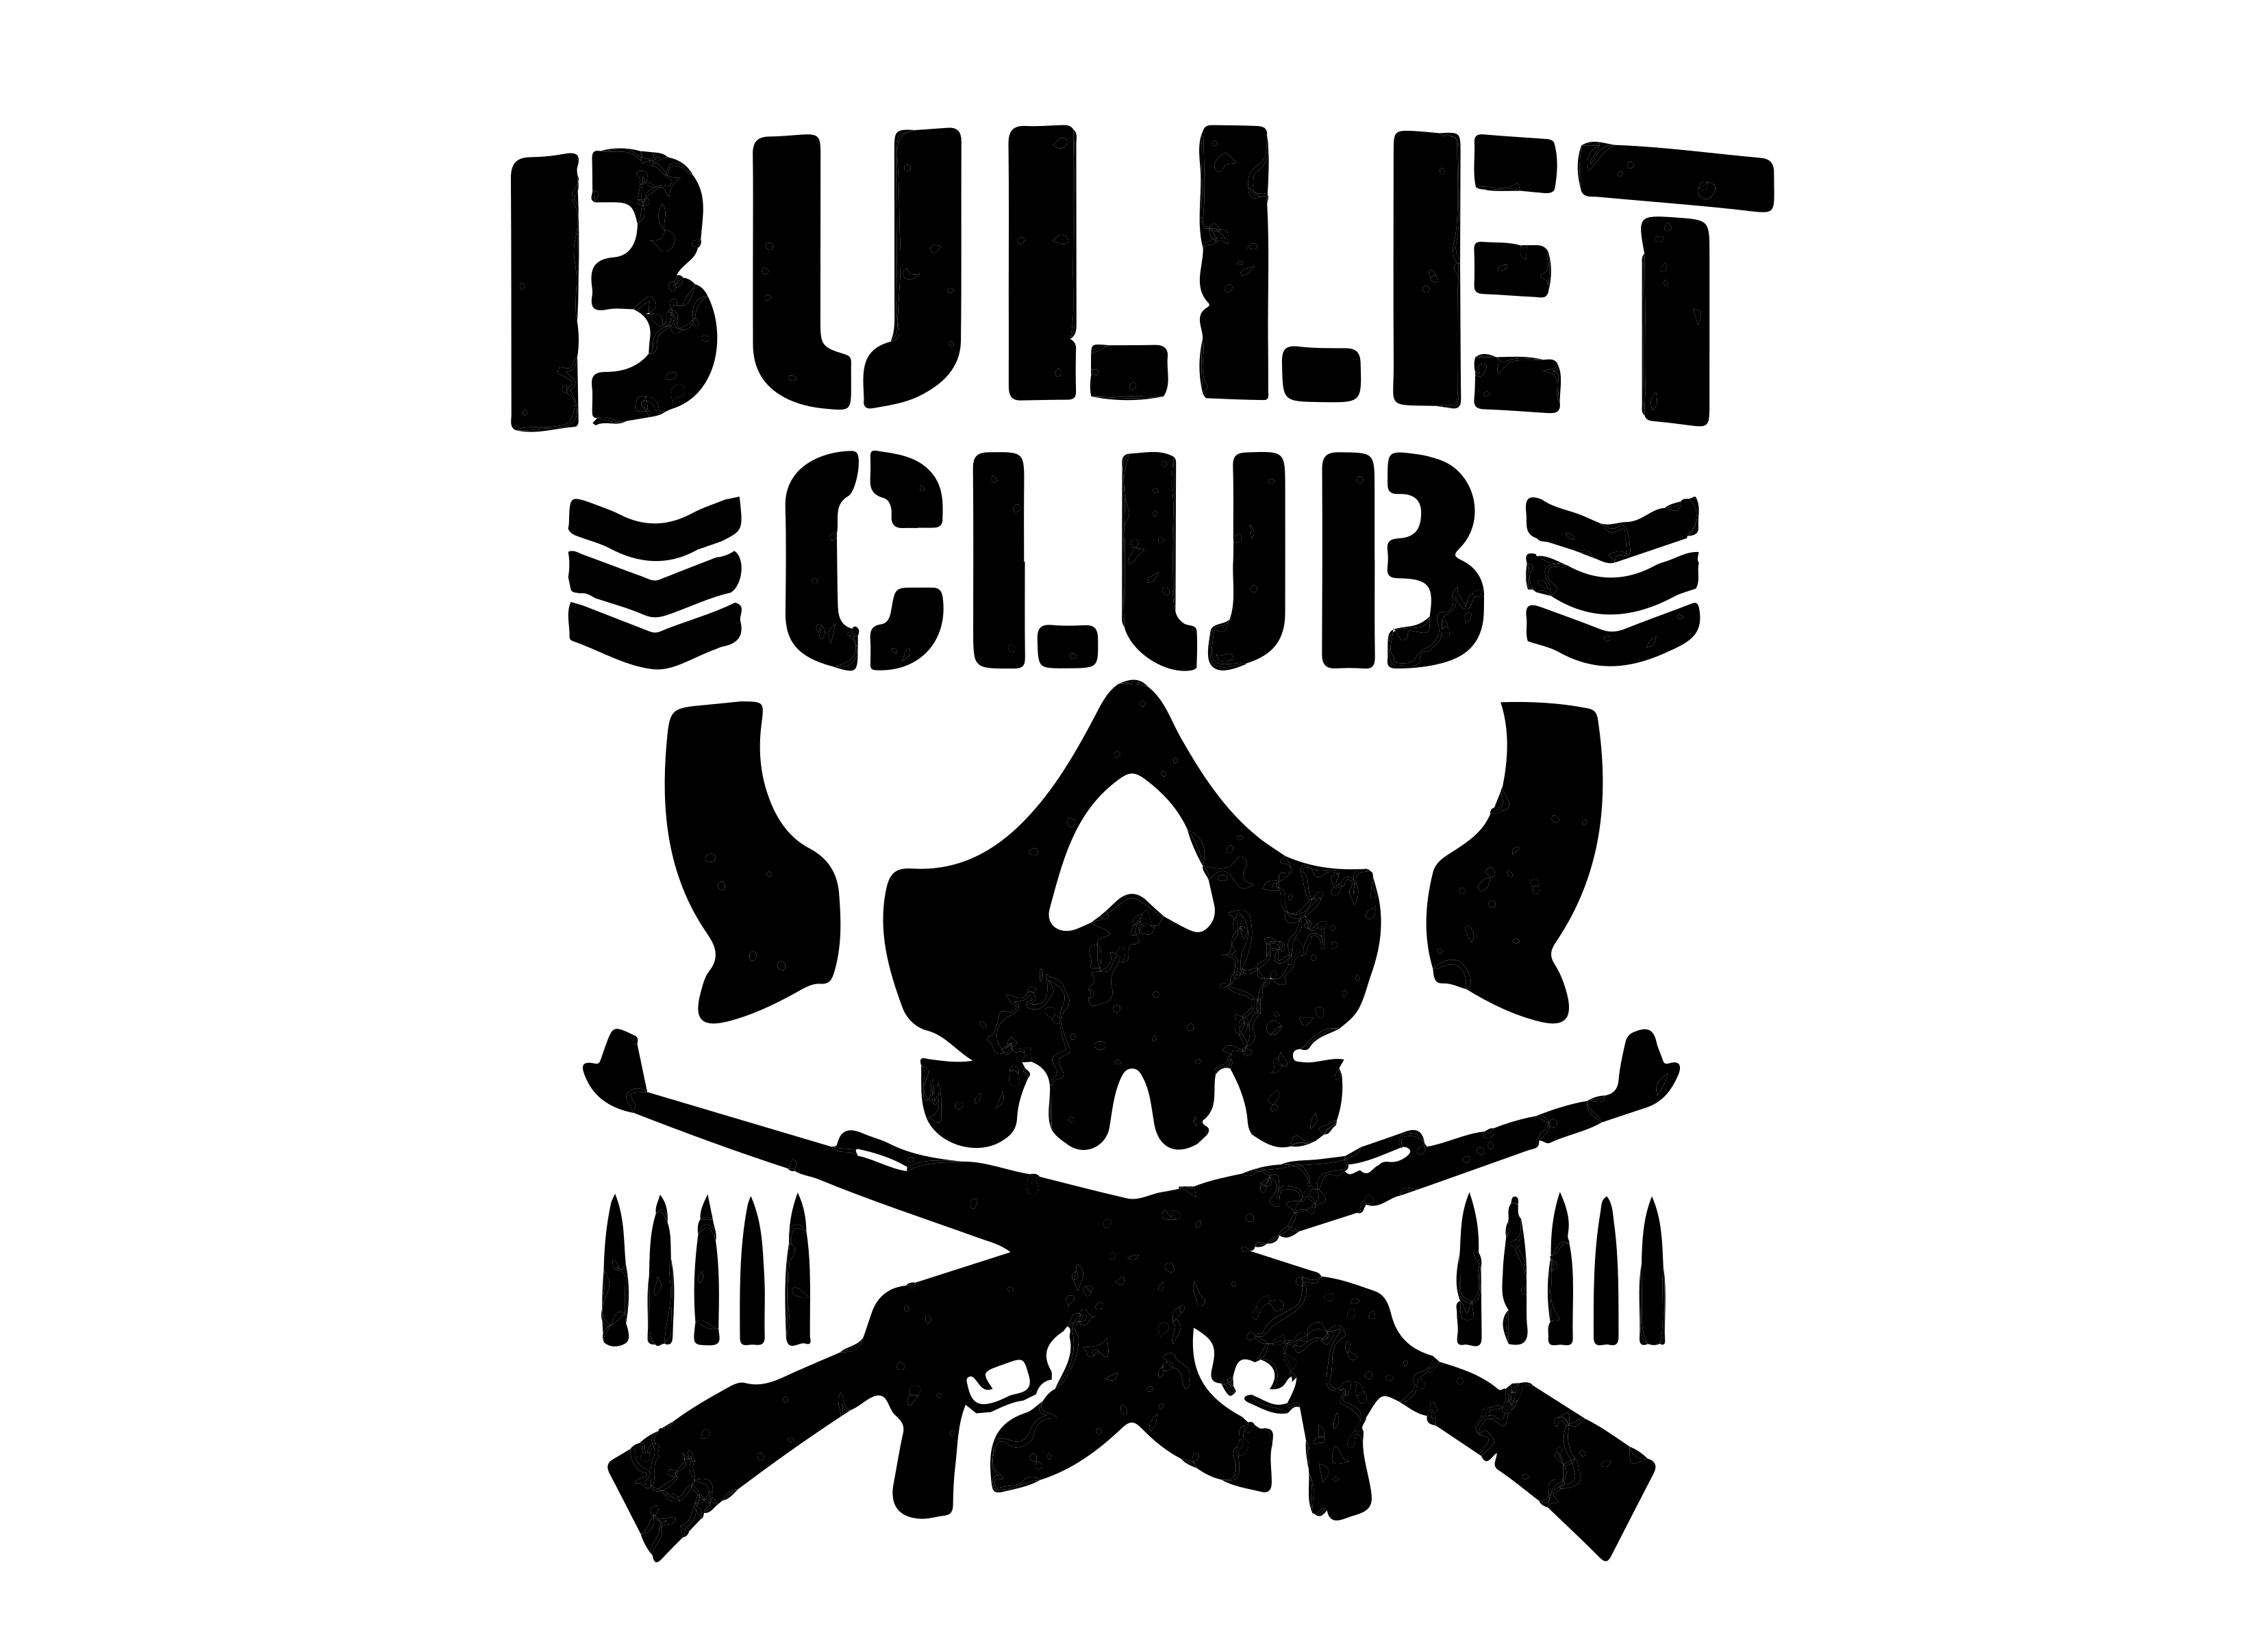 bullet club logo